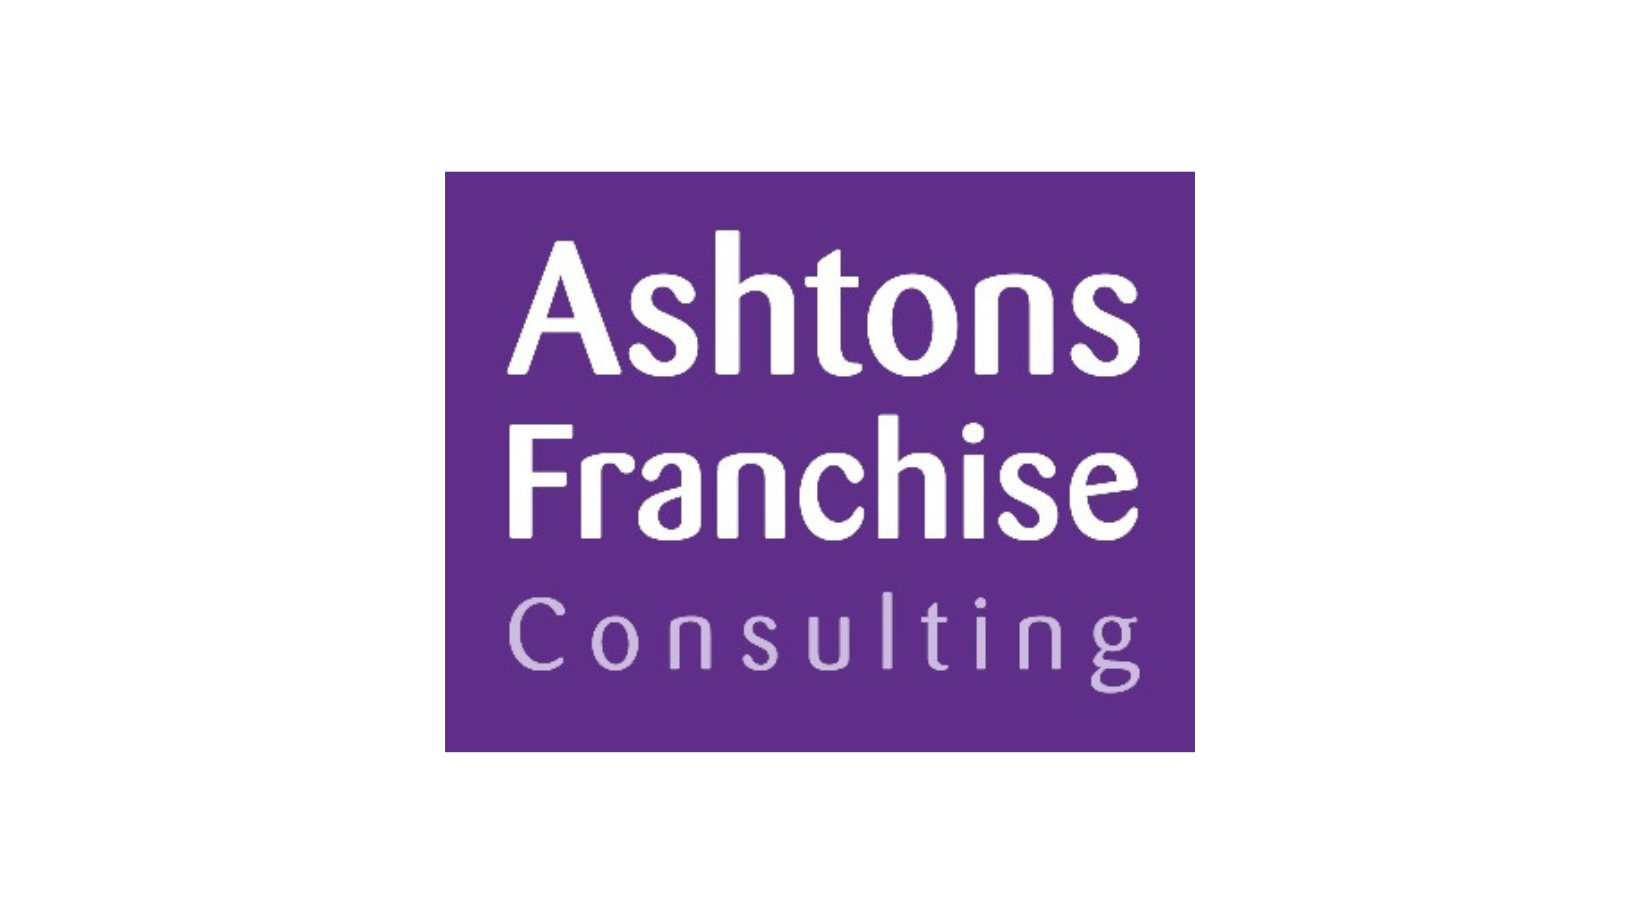 Ashtons Franchise Consulting